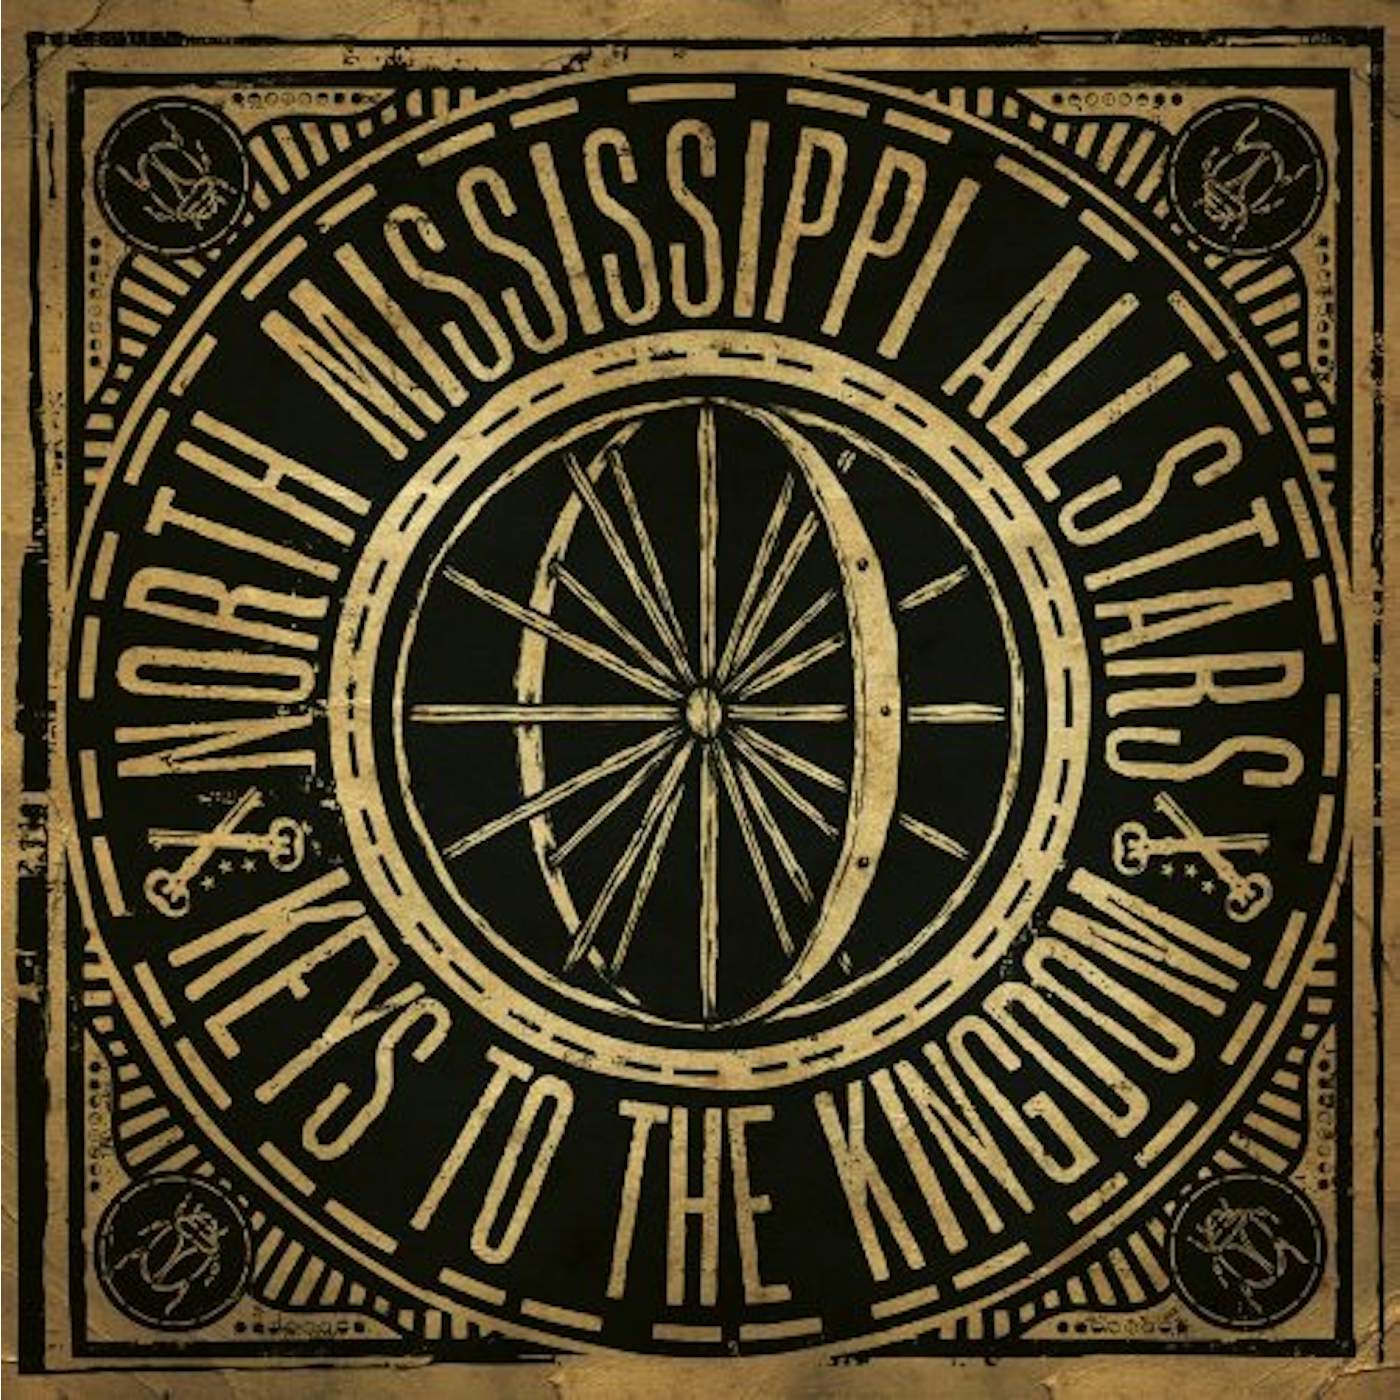 North Mississippi Allstars Keys to the Kingdom Vinyl Record